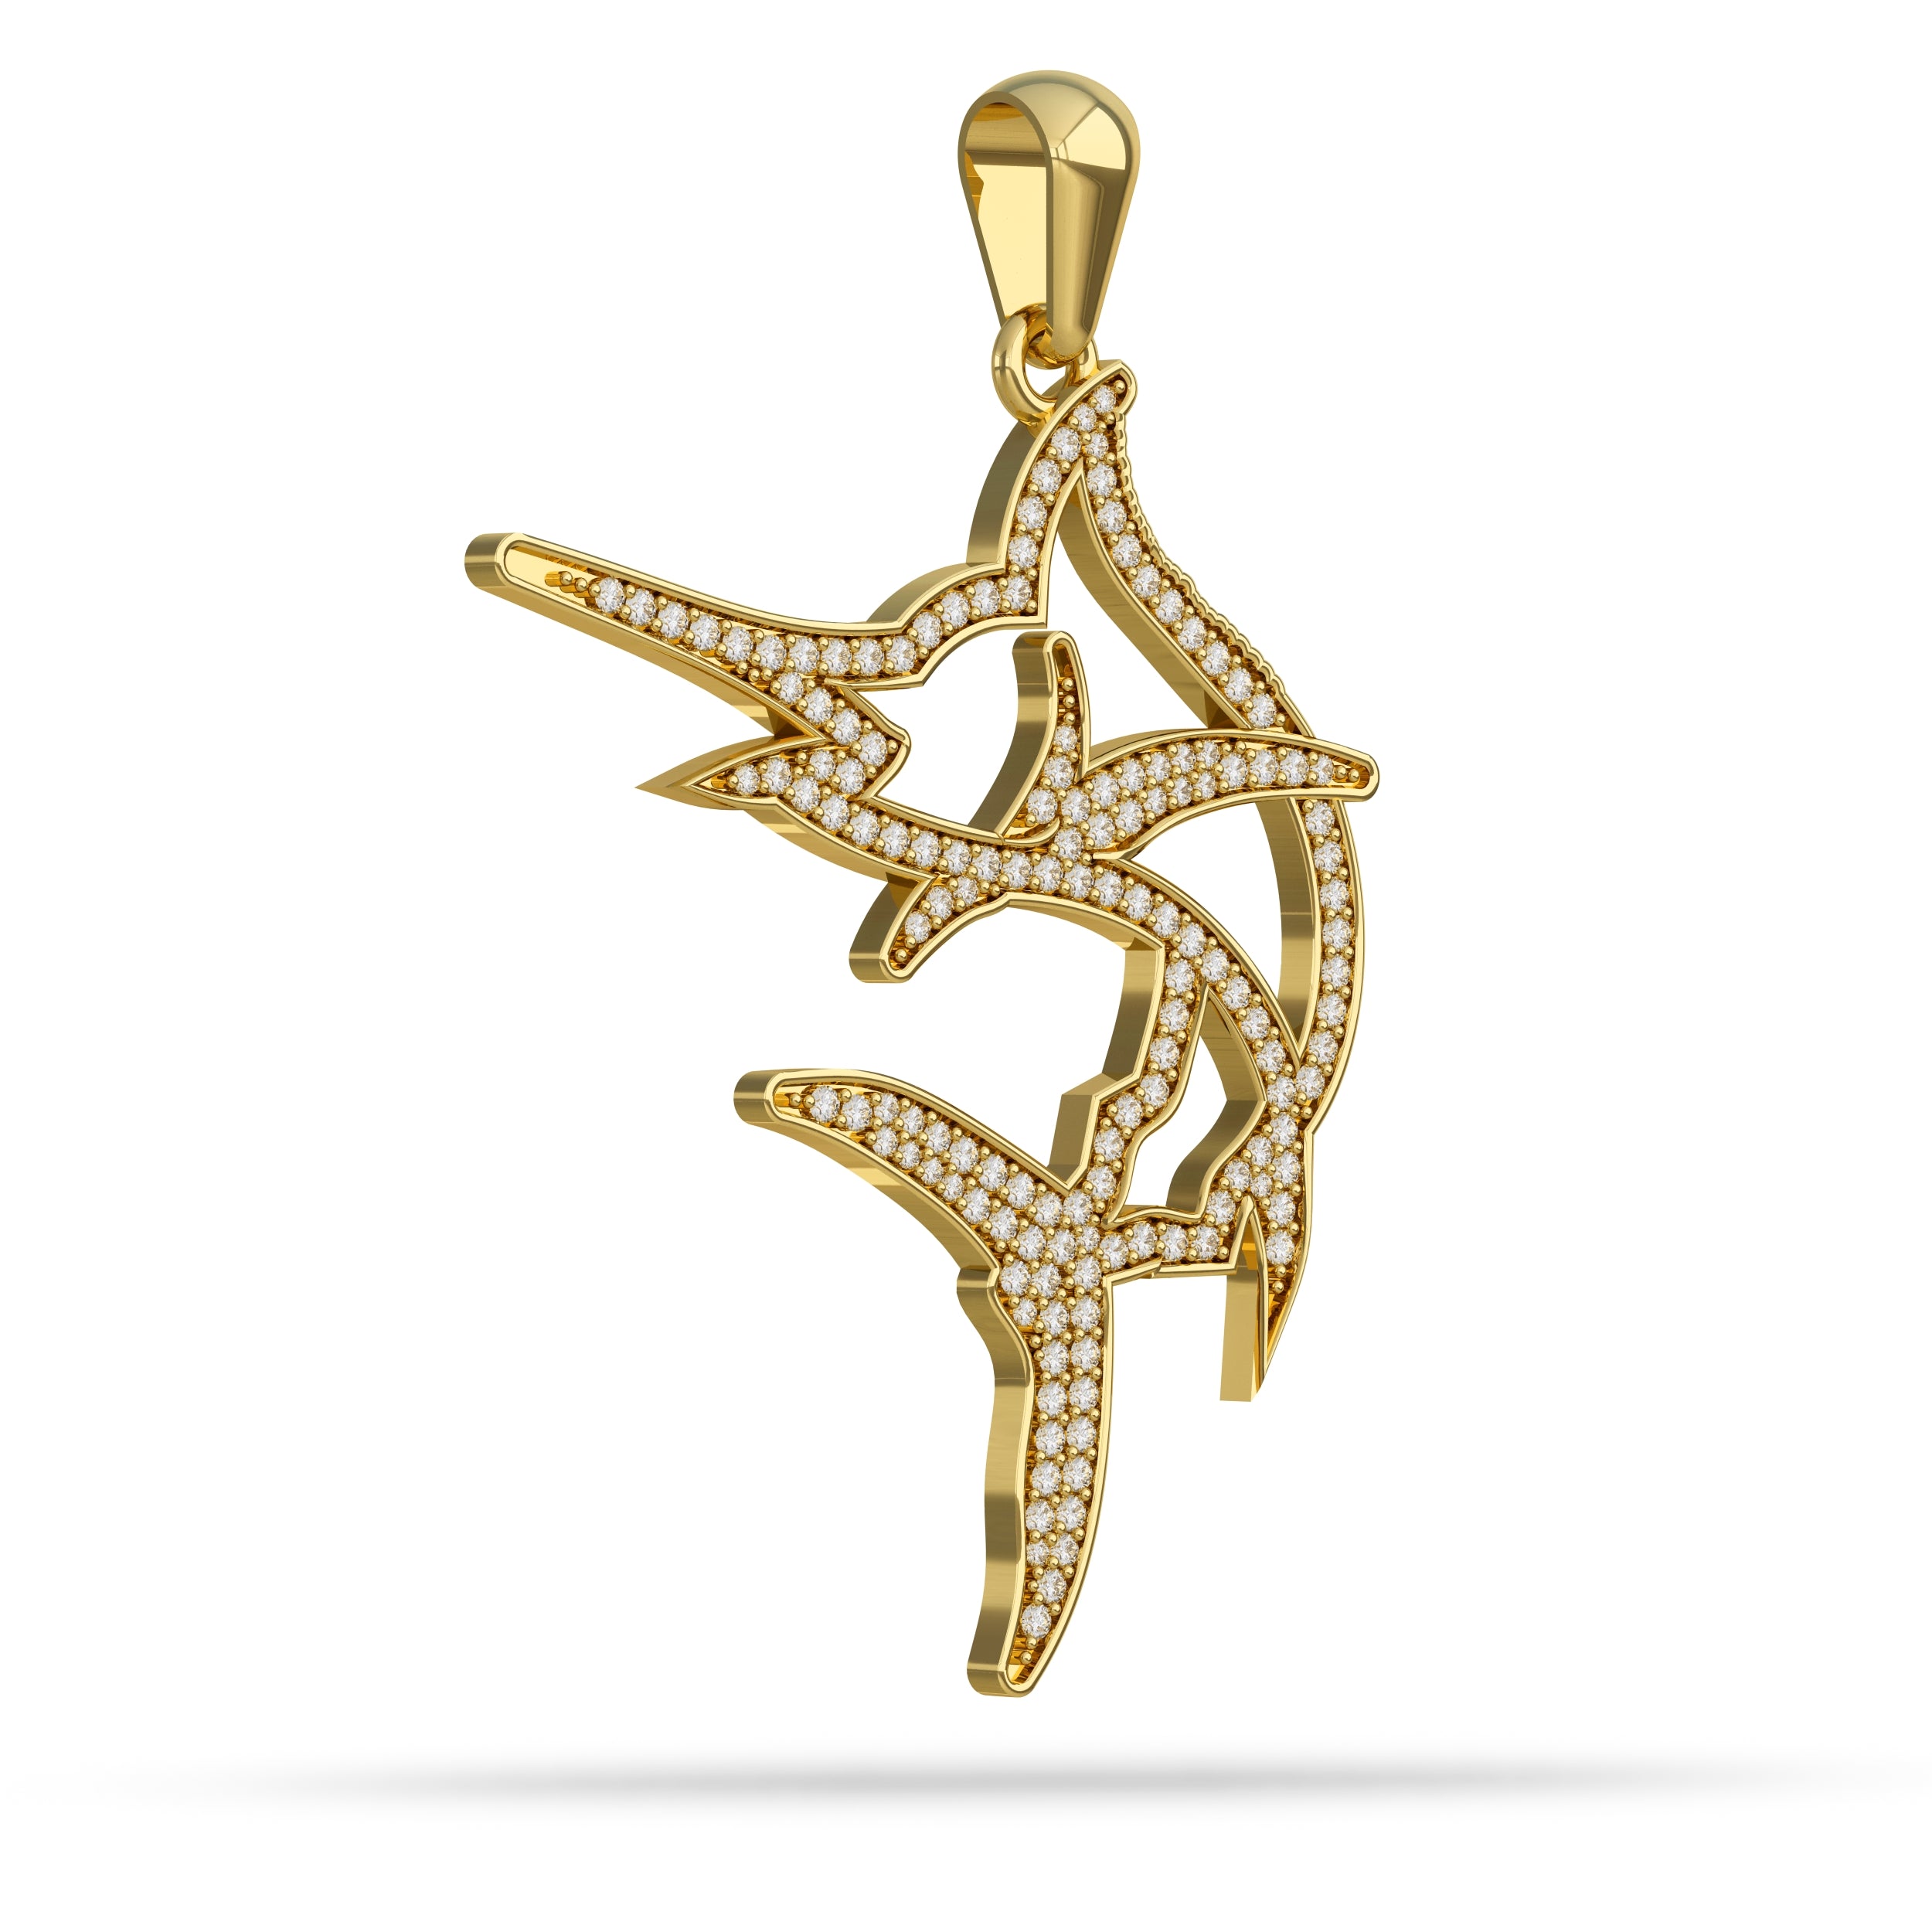 Jumping Blue Marlin Silhouette Pendant By Nautical Treasure Jewelry Gold Diamond Gemstones